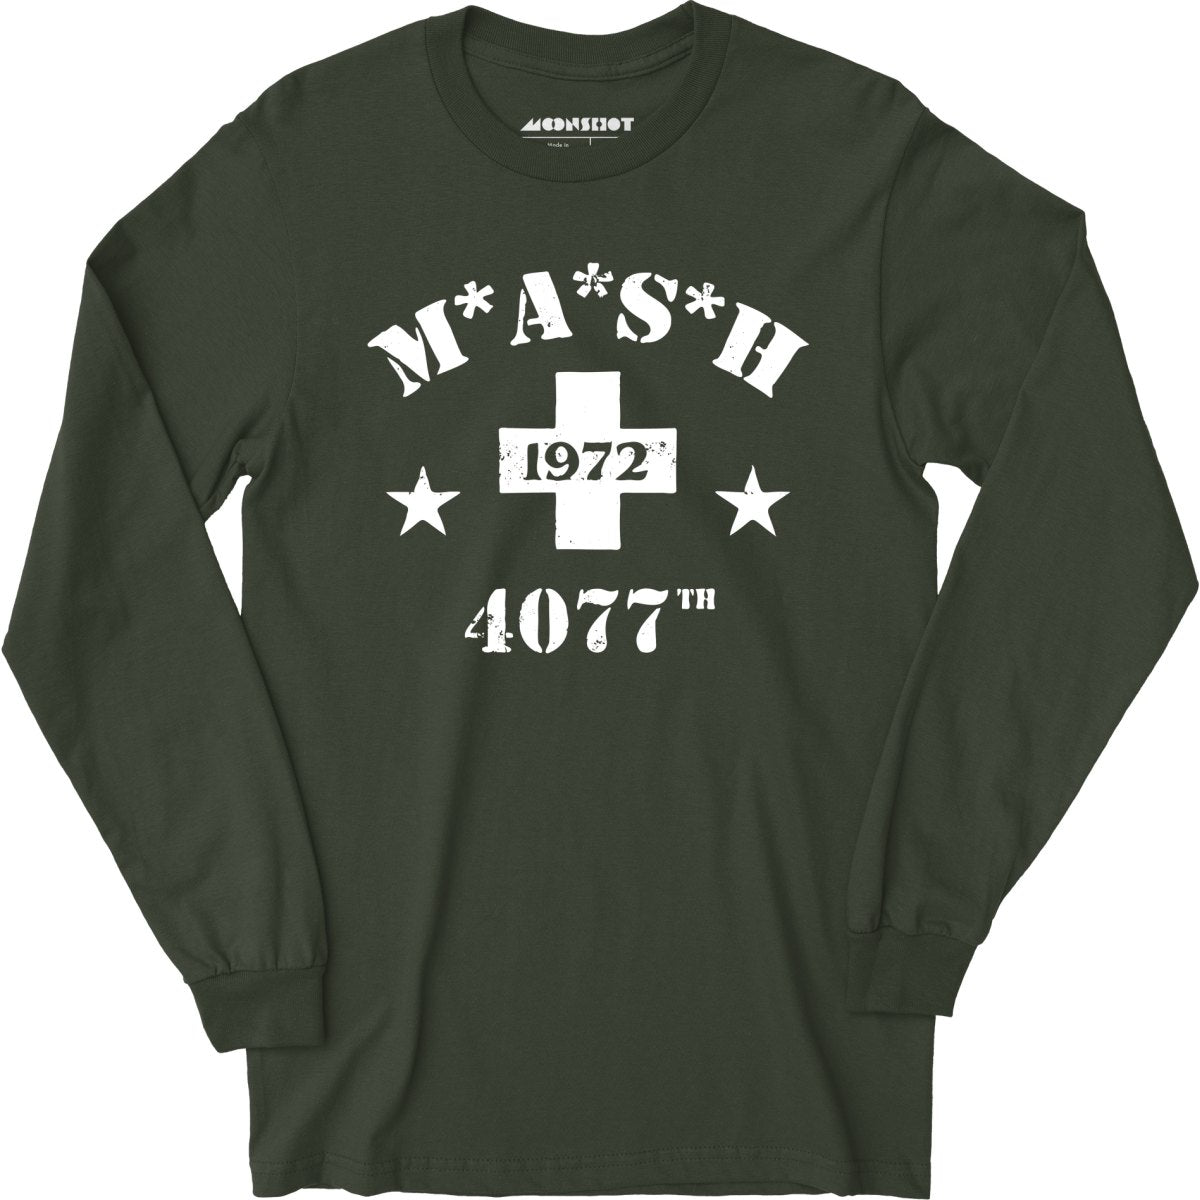 Mash 4077th - Long Sleeve T-Shirt